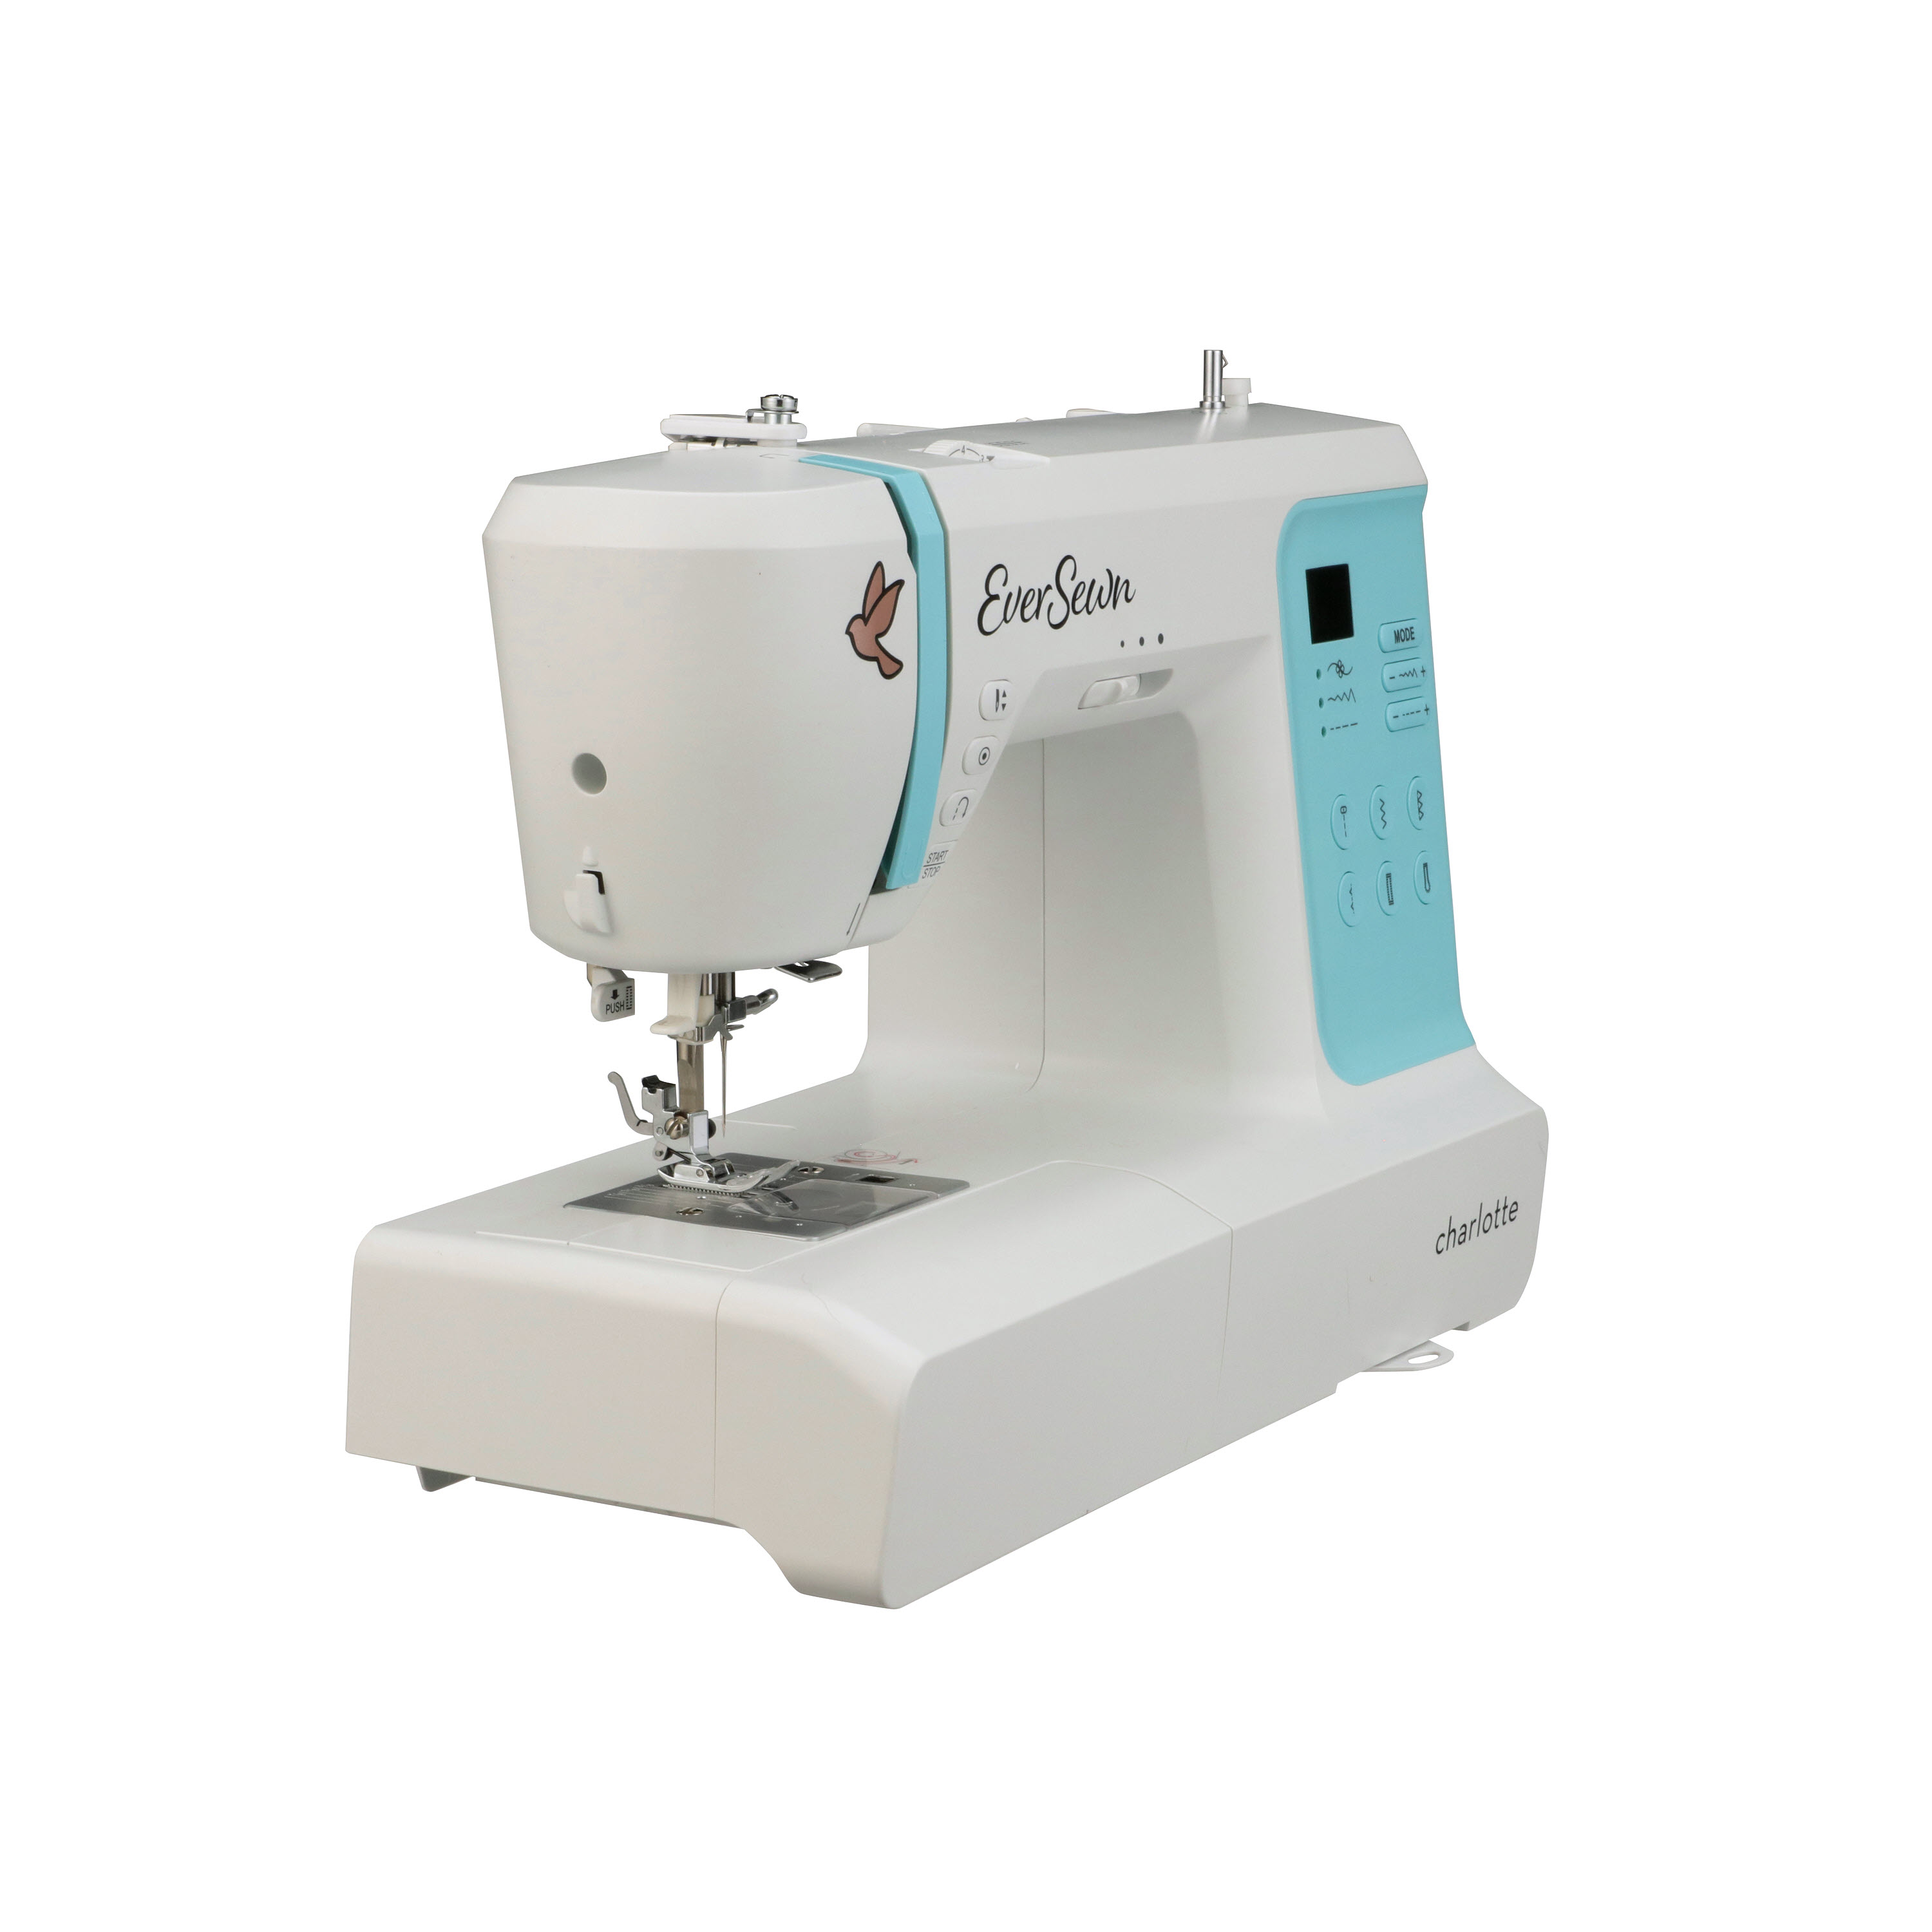 Eversewn Charlotte Computerized Sewing Machine : Target